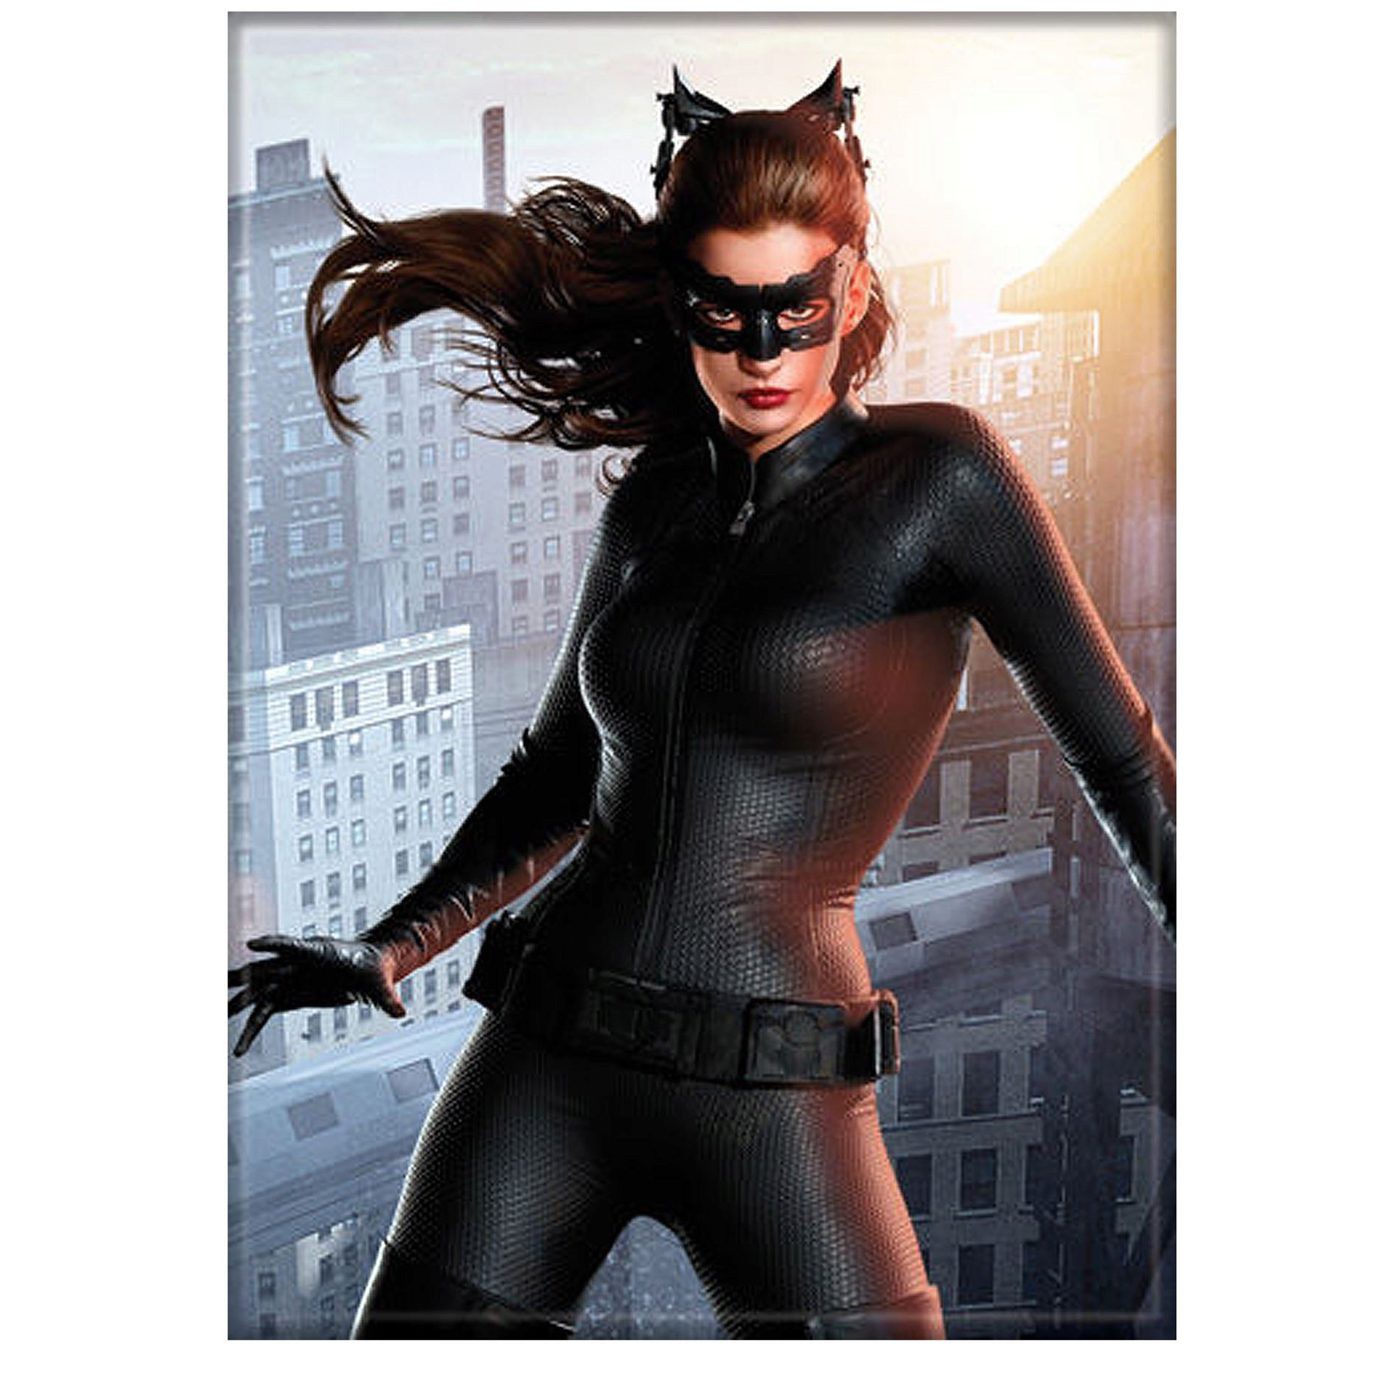 Dark Knight Rises Catwoman City Pose Magnet